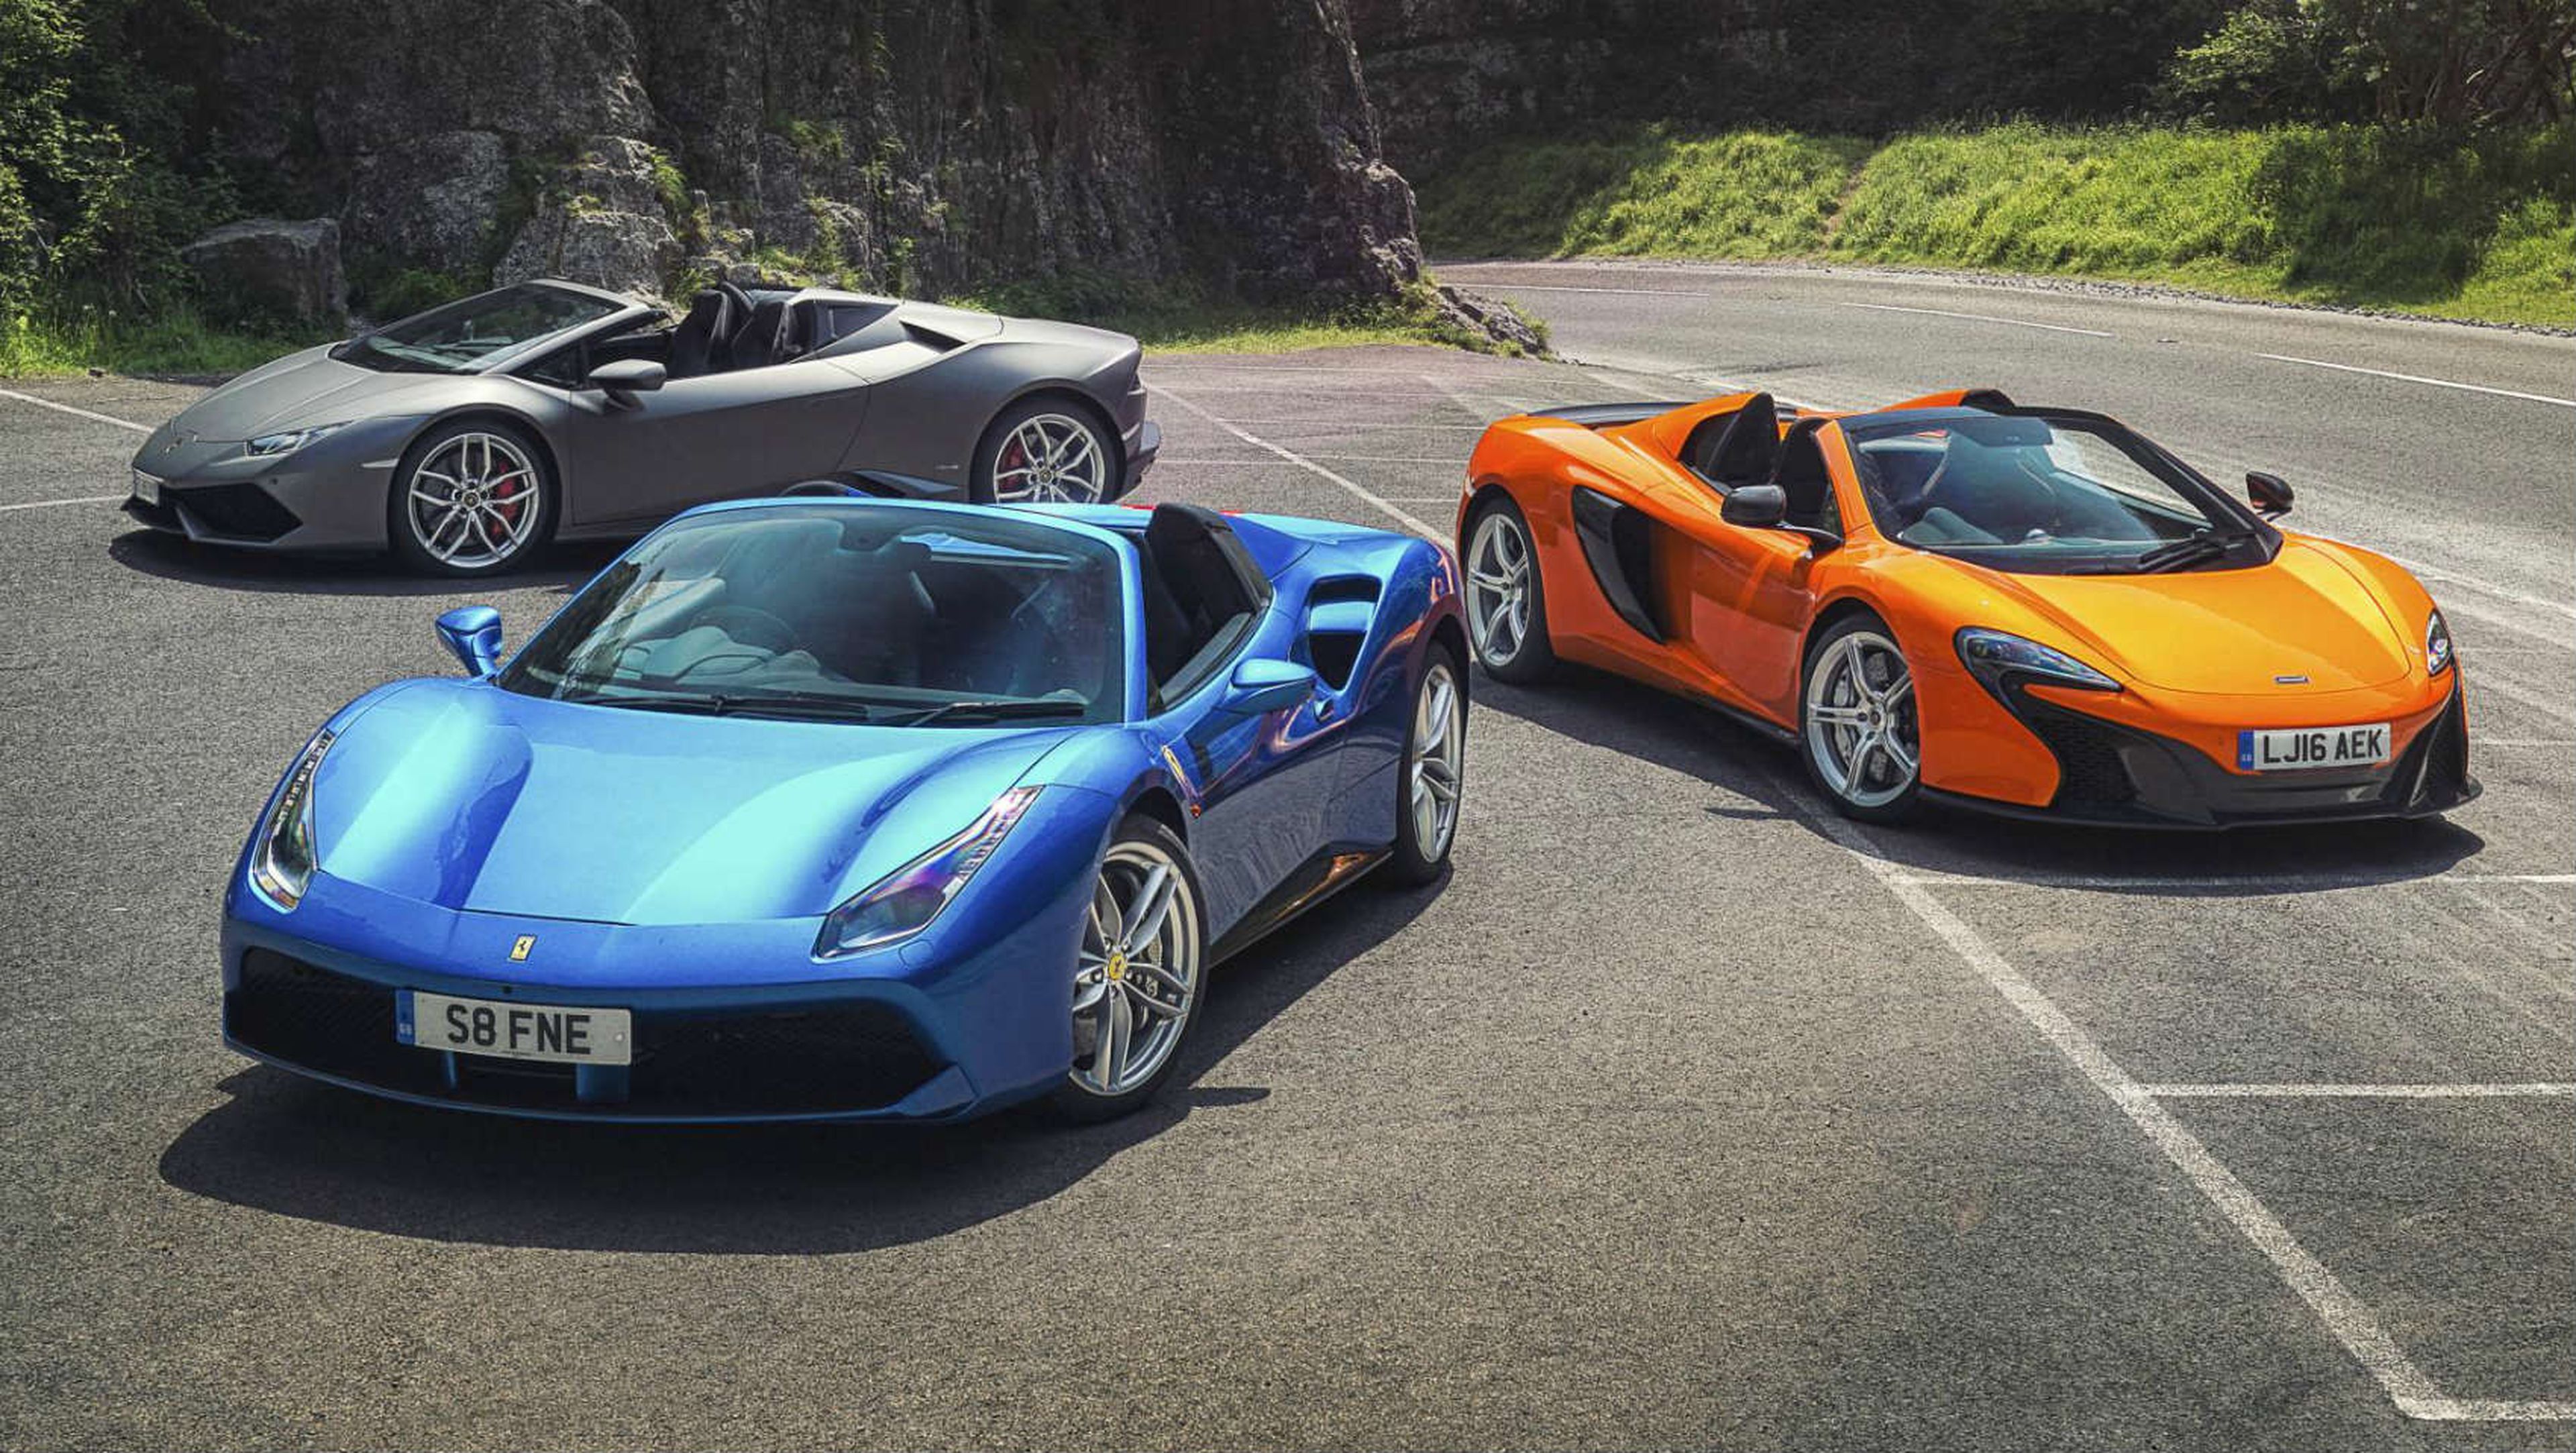 comparativa entre el Ferrari 488 Spider, el Lamborghini Huracán y el McLaren 650S Spider.